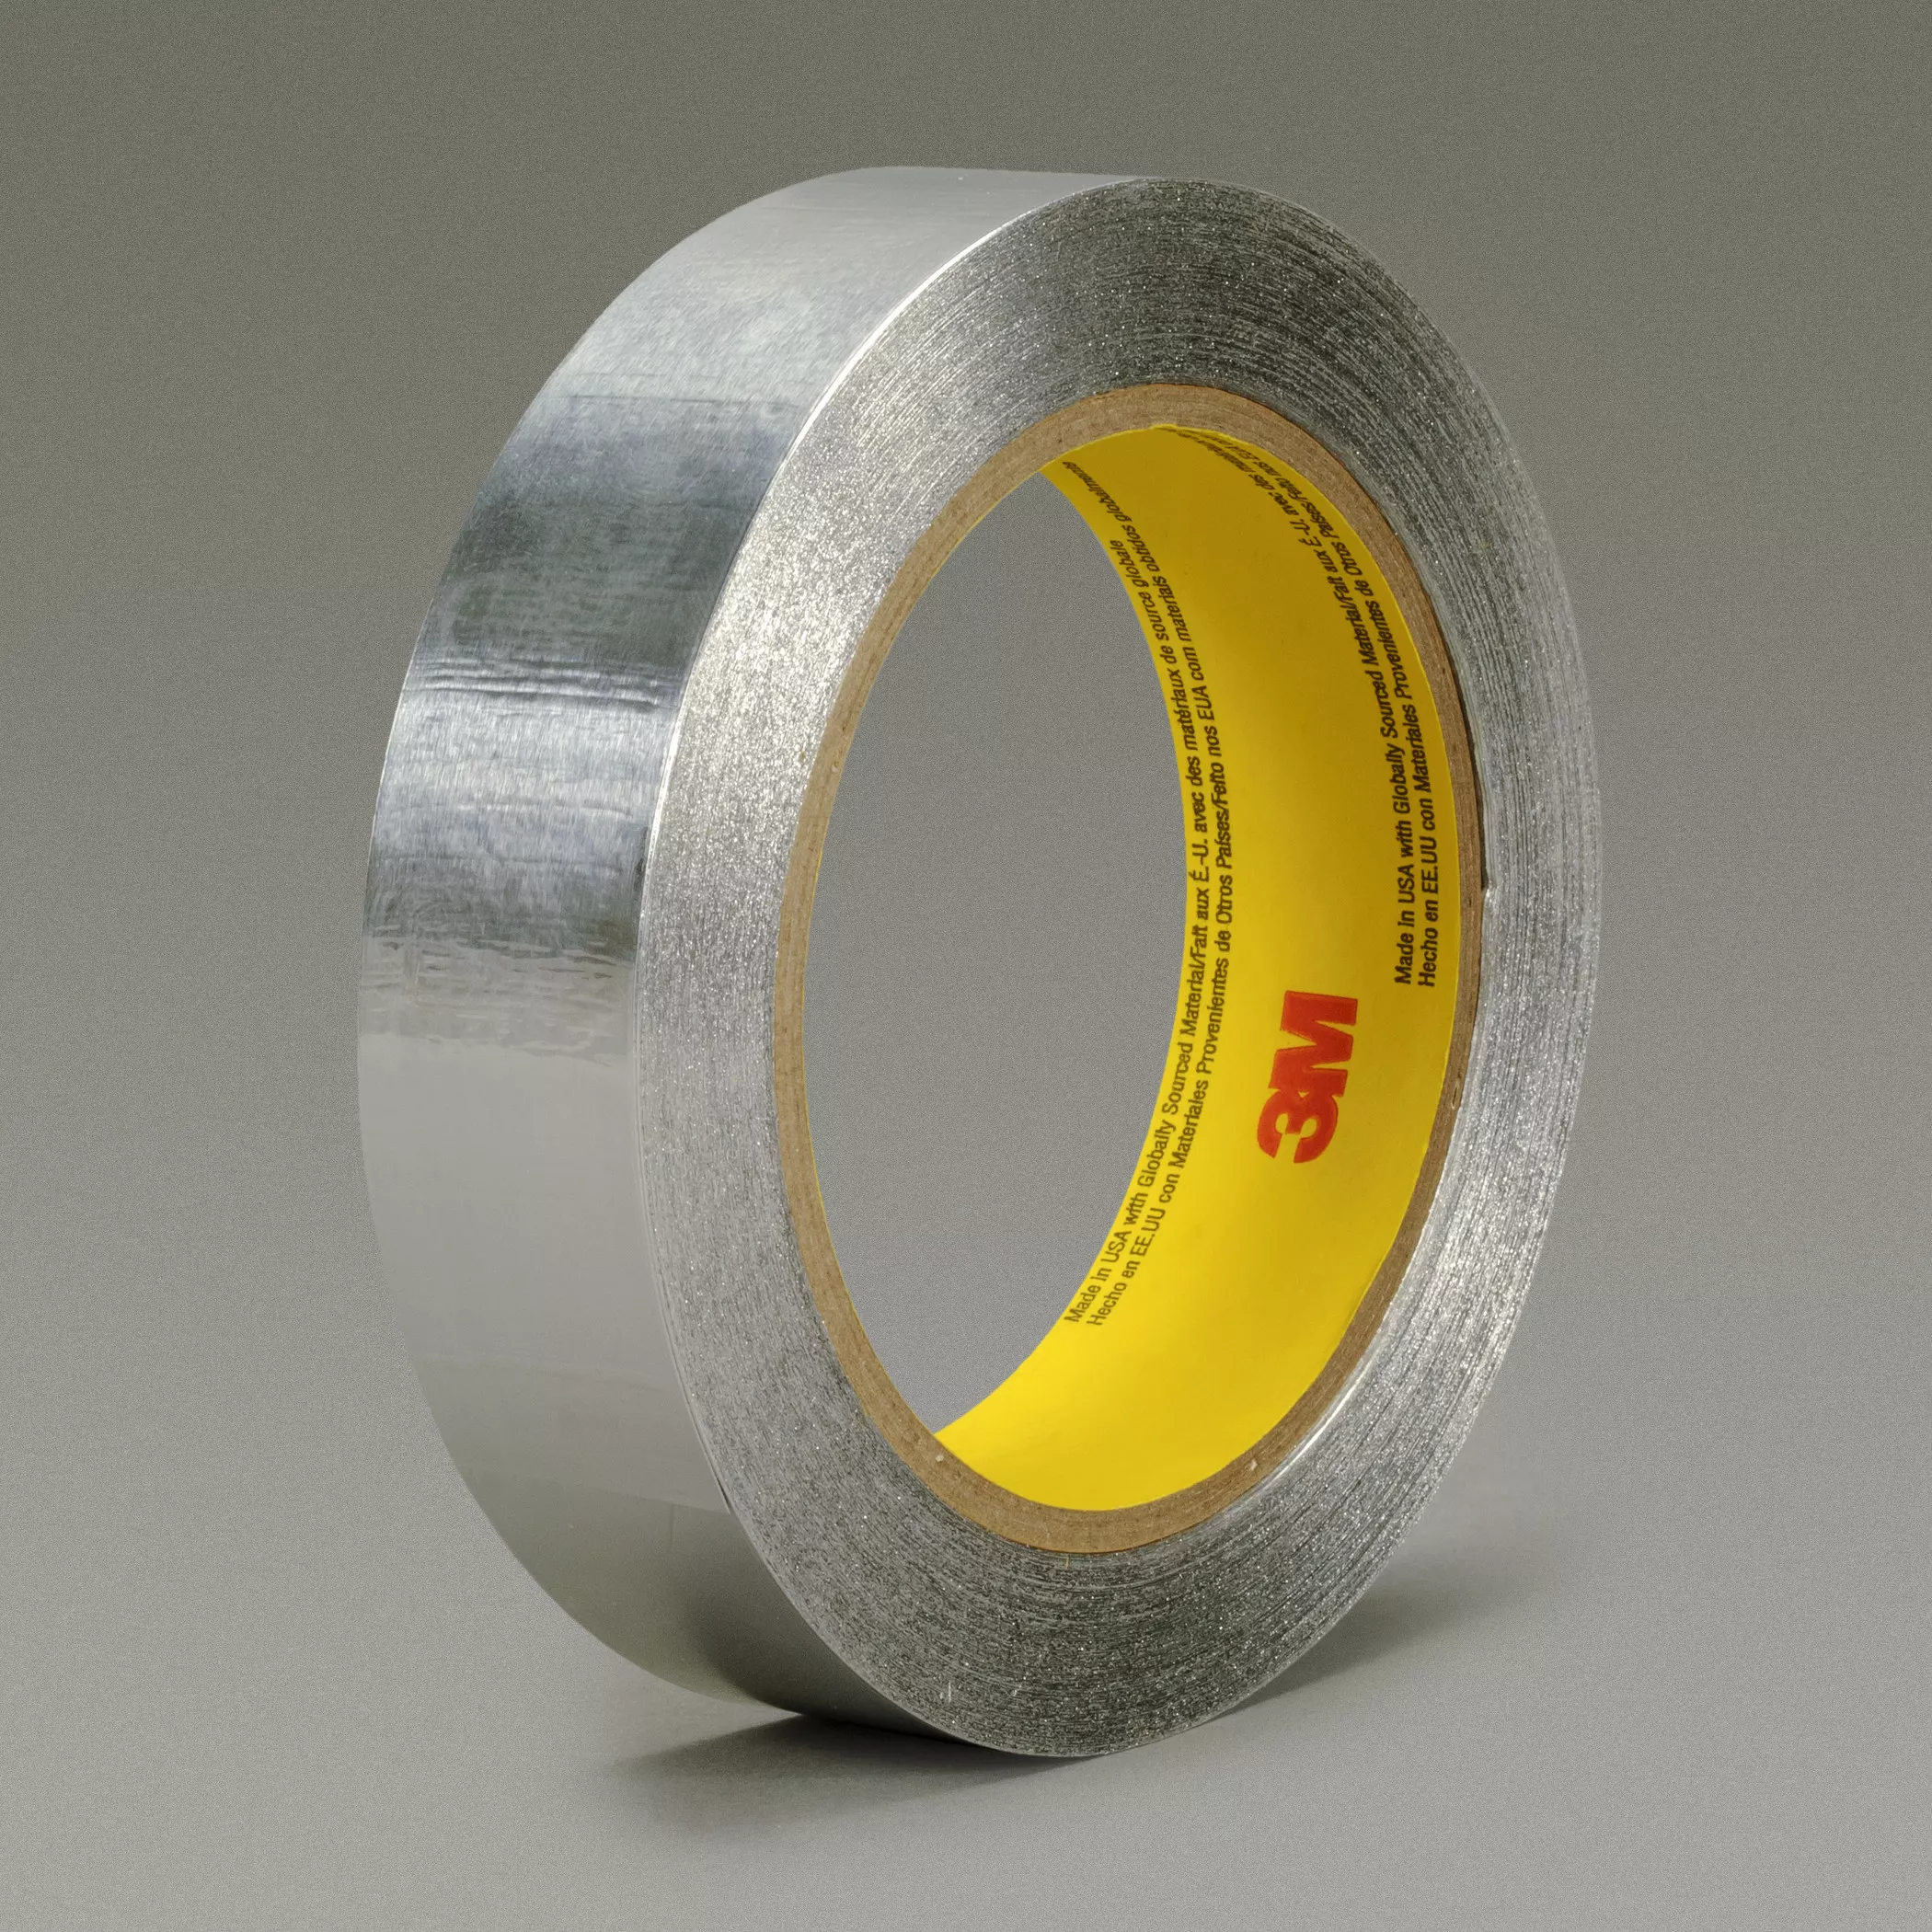 3M™ Aluminum Foil Tape 4380, Silver, 4 in x 60 yd, 3.25 Mil, 12
Rolls/Case